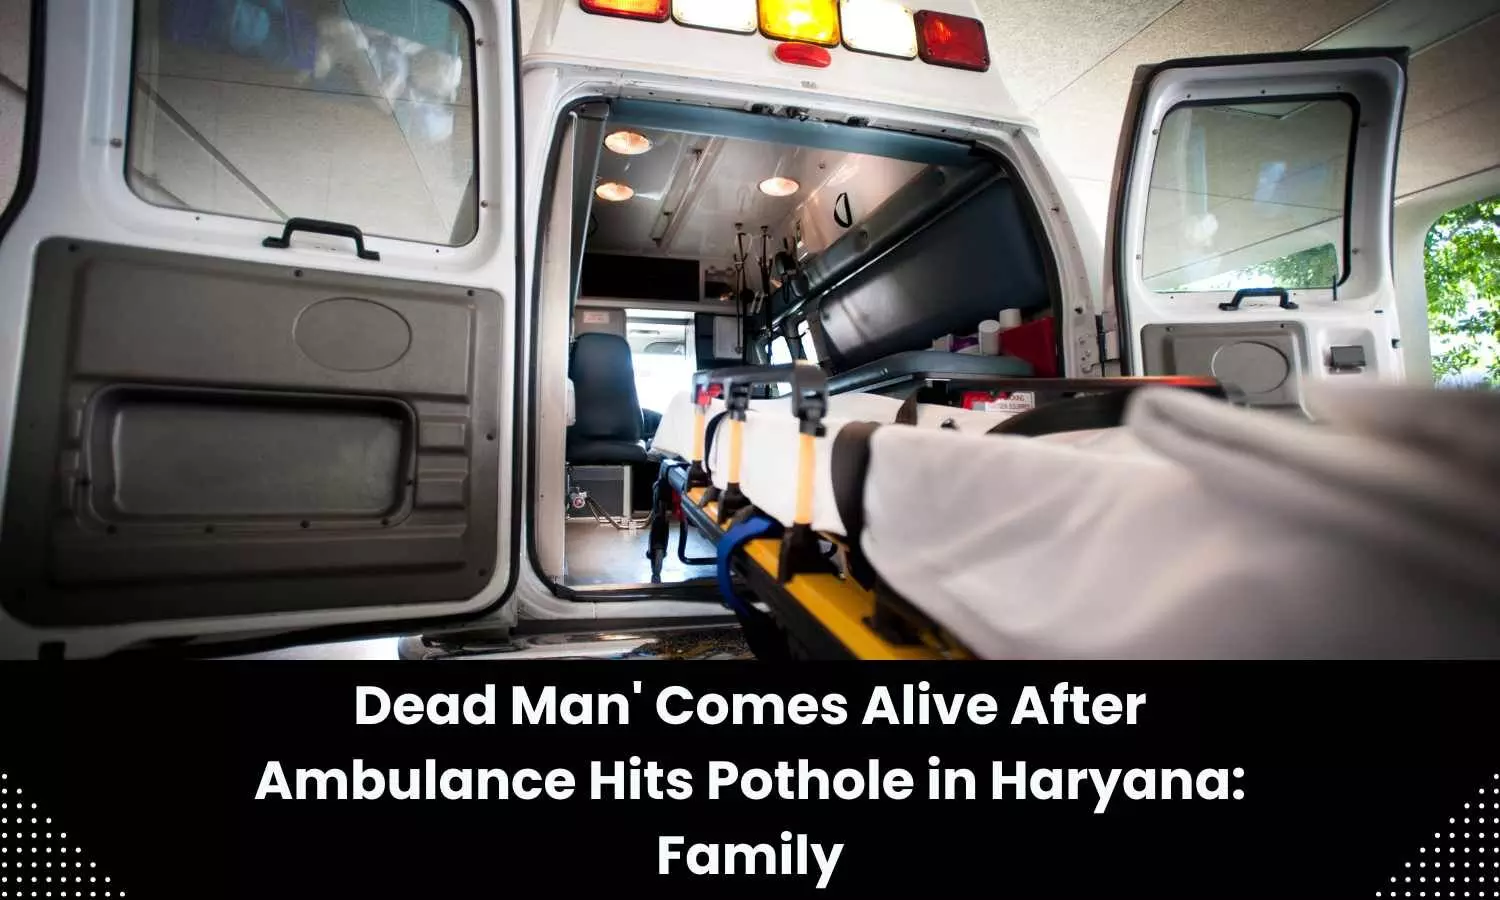 Pothole becomes lifesaver for dead Haryana man